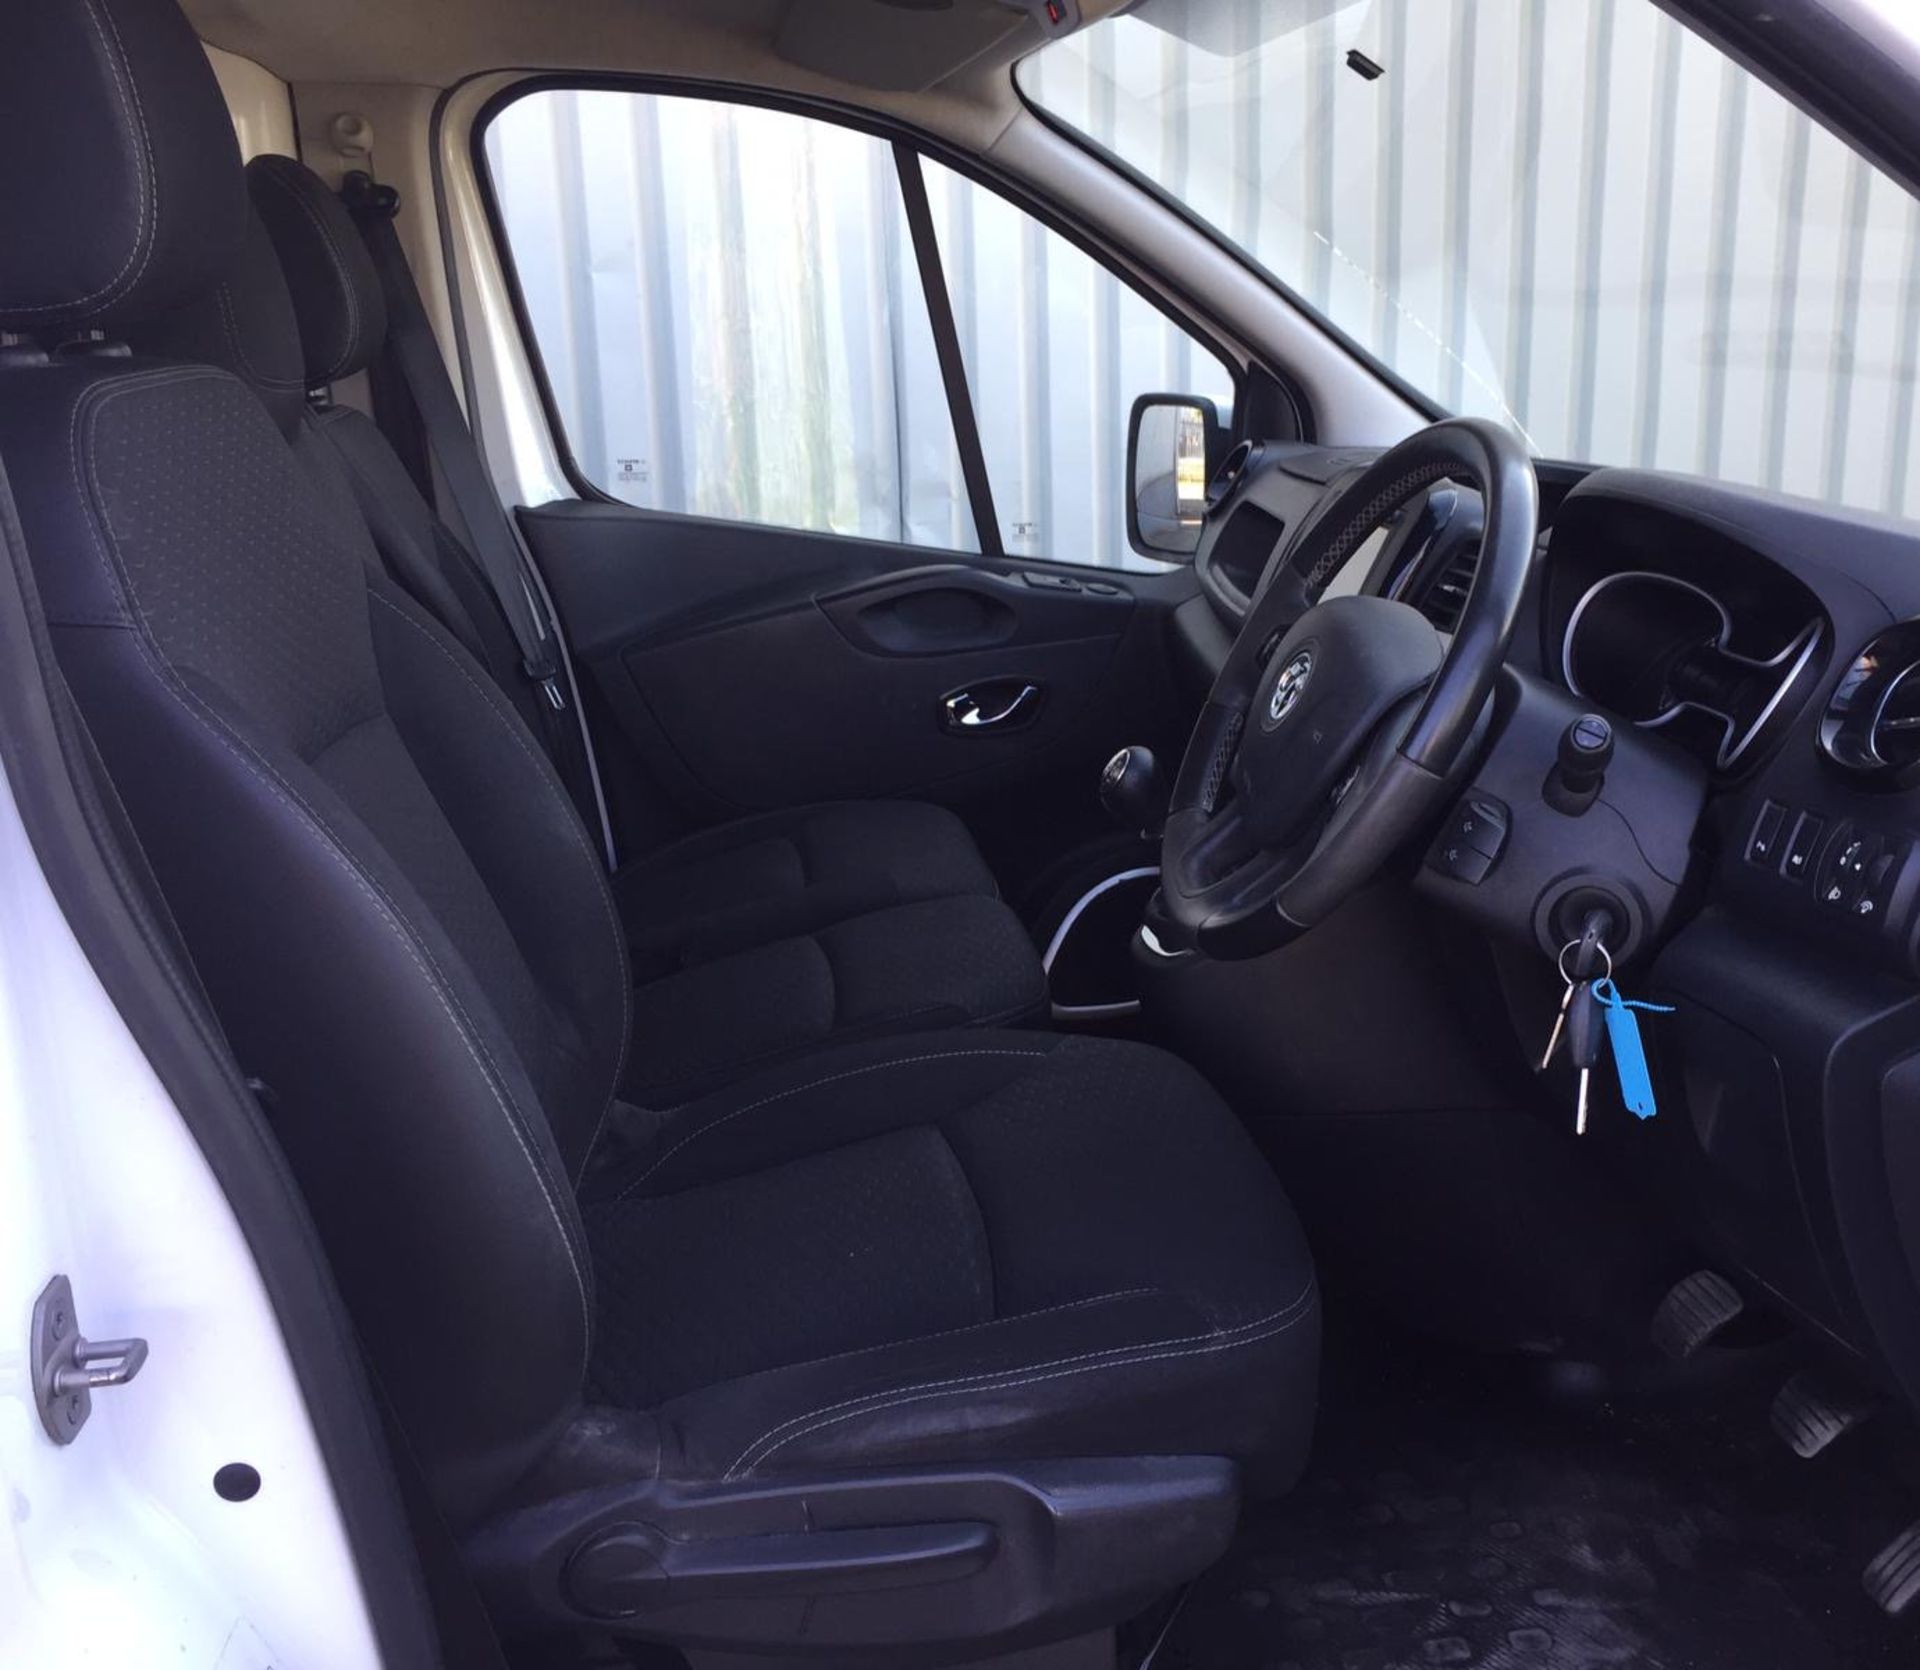 2016 Vauxhall Vivaro 1.6 CDTi 2900 Sportive 120 Van - One Owner Van From New - CL505 - Location: Co - Image 19 of 19